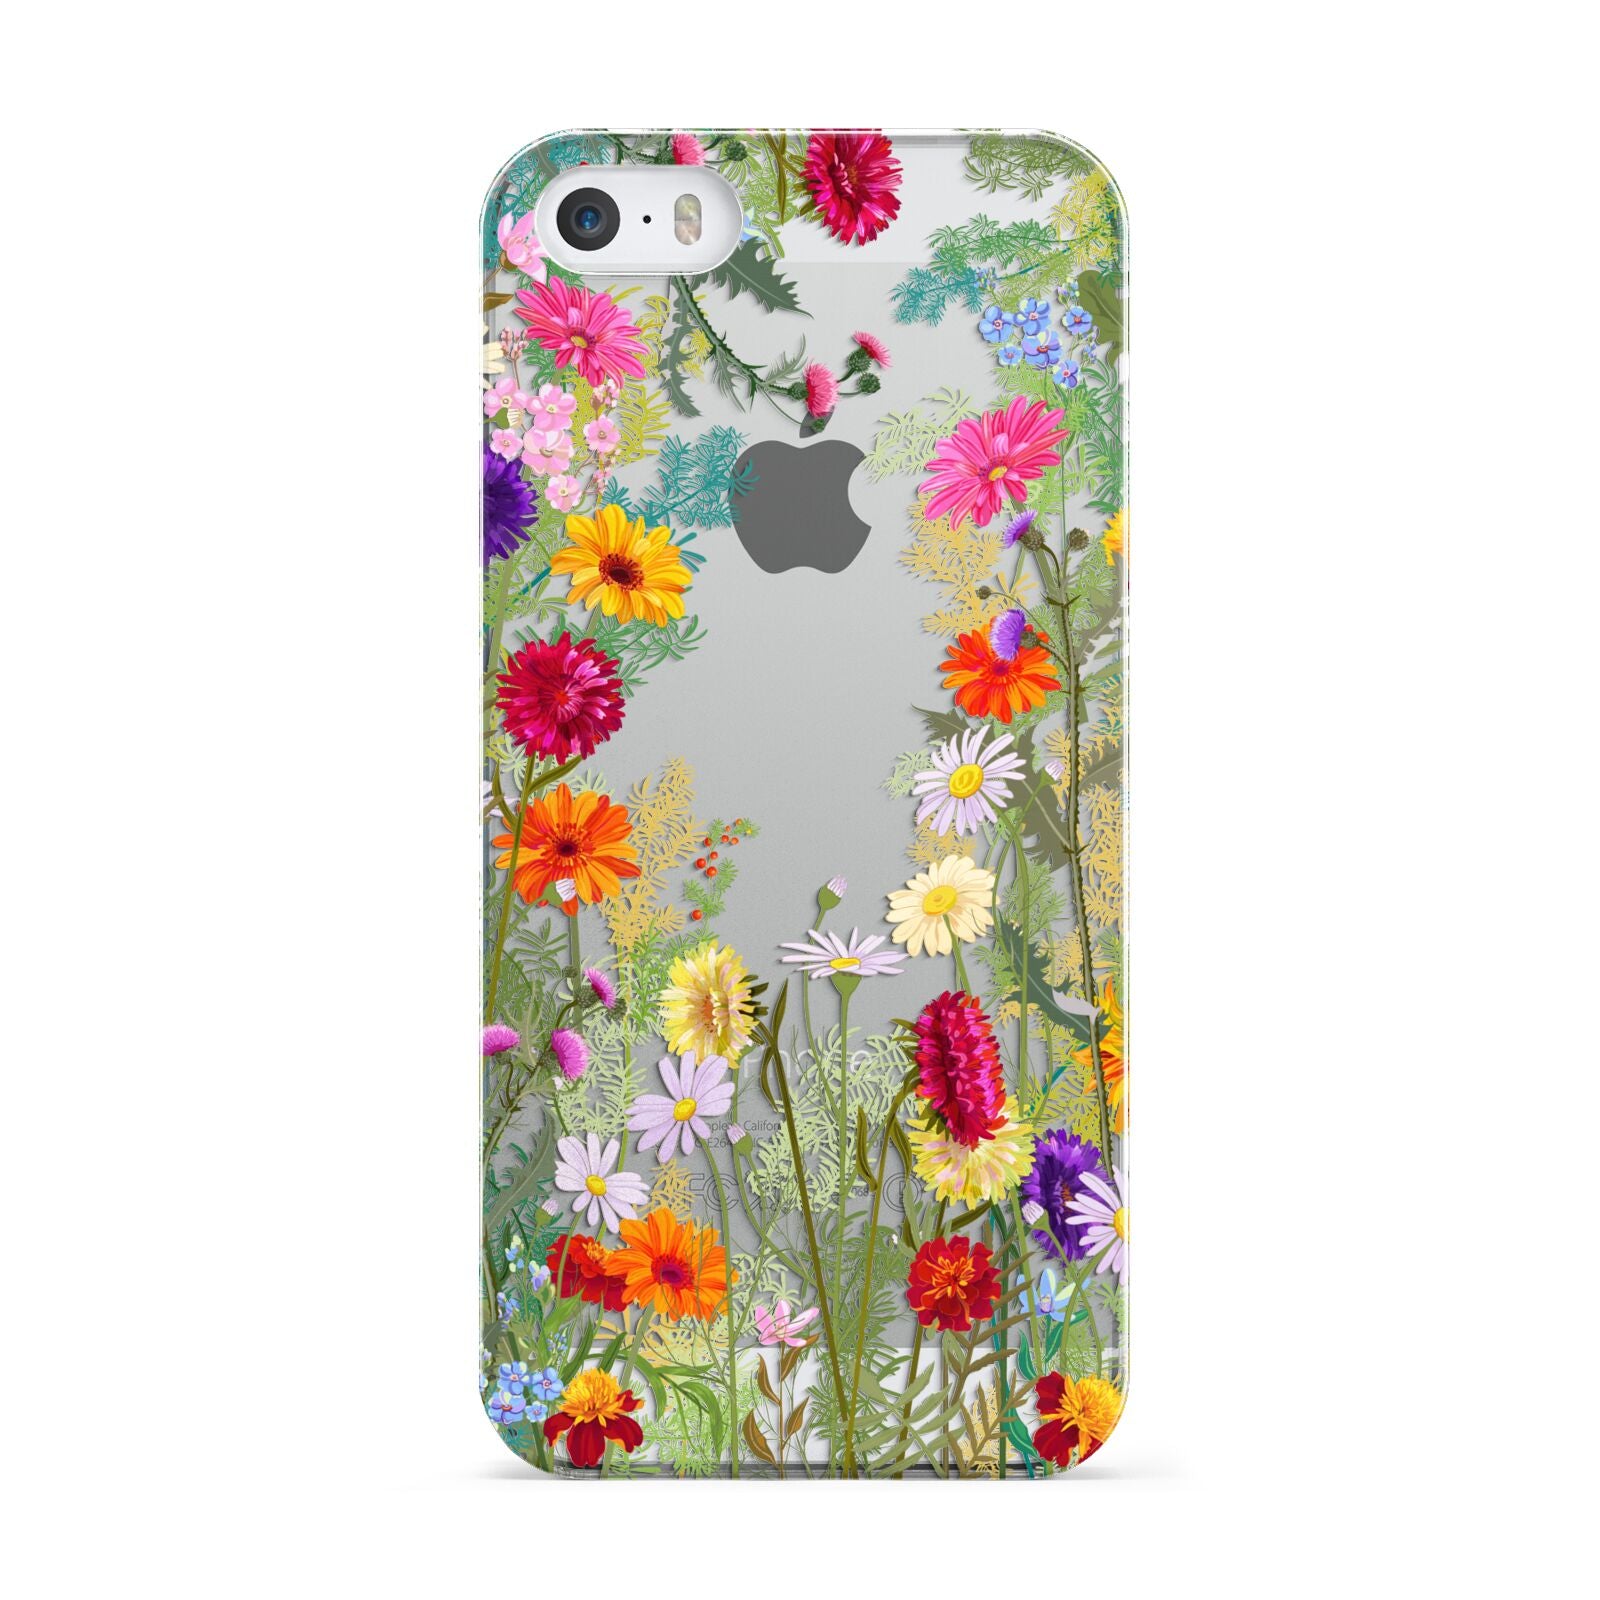 Wildflower Apple iPhone 5 Case